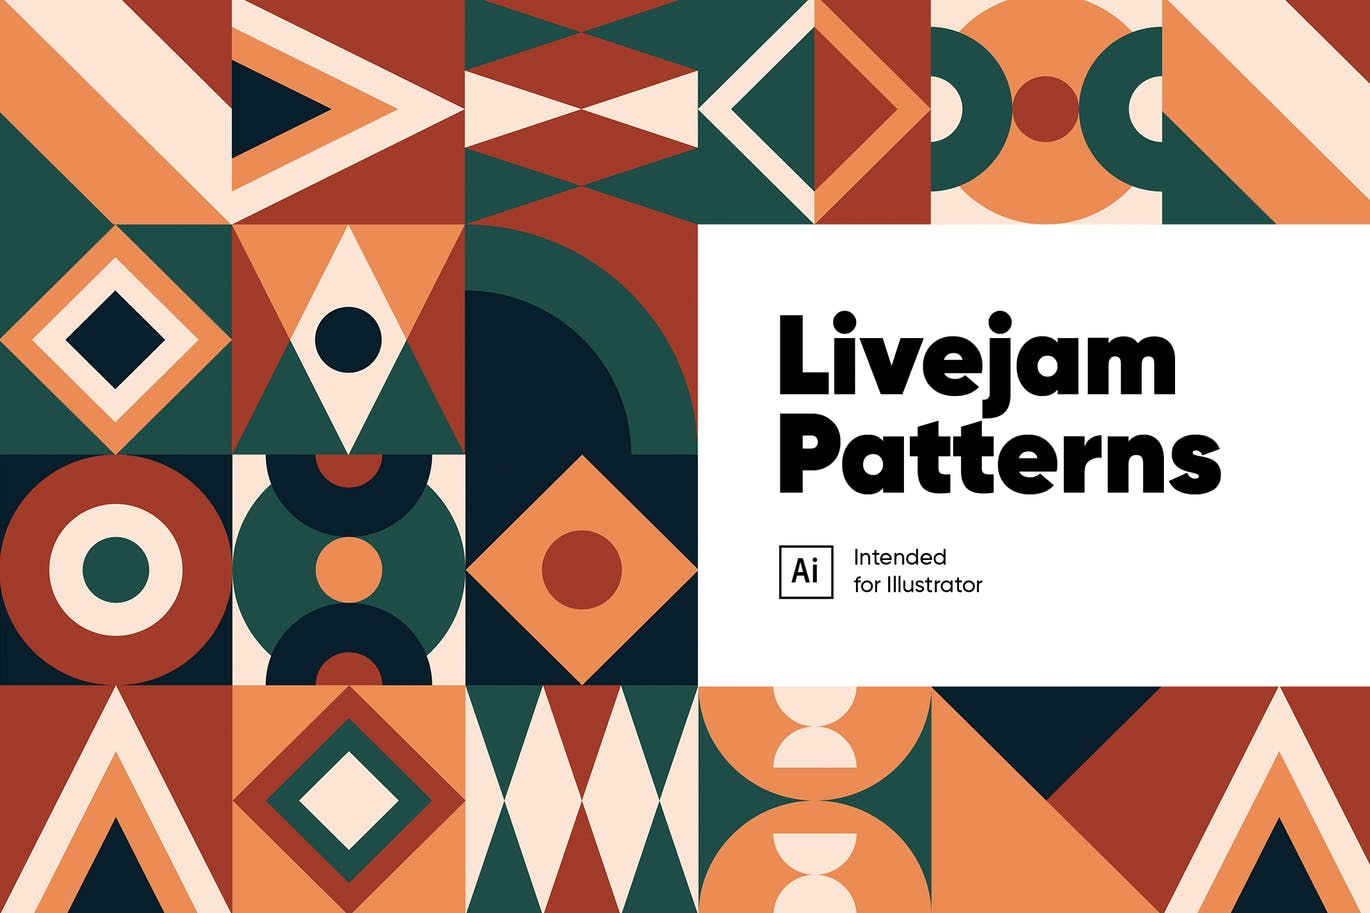 Livejam抽象图案背景16图库精选 Livejam Abstract Patterns Pack插图